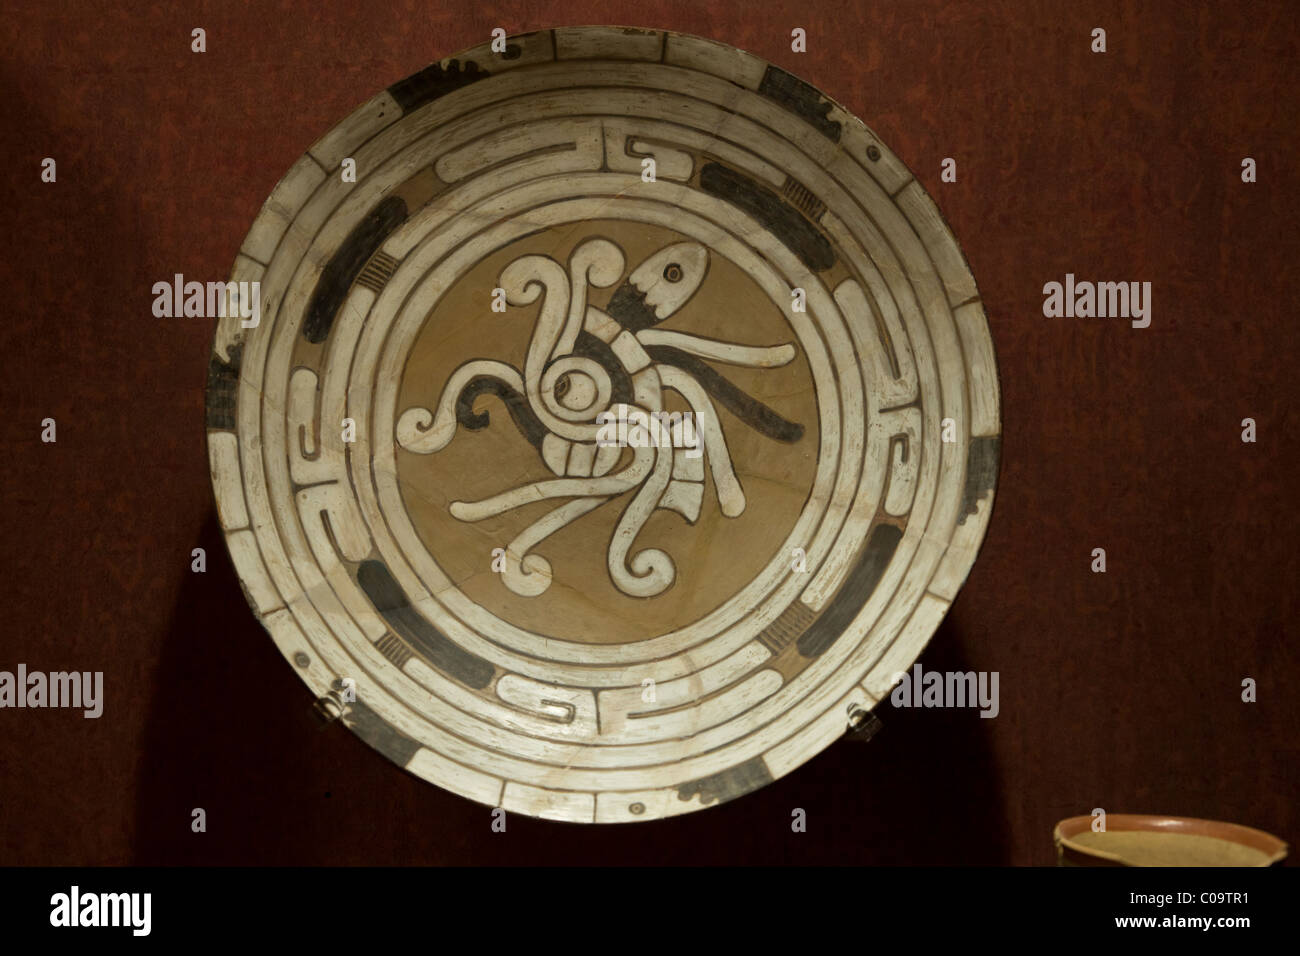 Olmec ceramic bowl with image of Quetzalcoatl from the Isla de Sacrificios (Island of Sacrifices) in Veracruz Mexico. Stock Photo